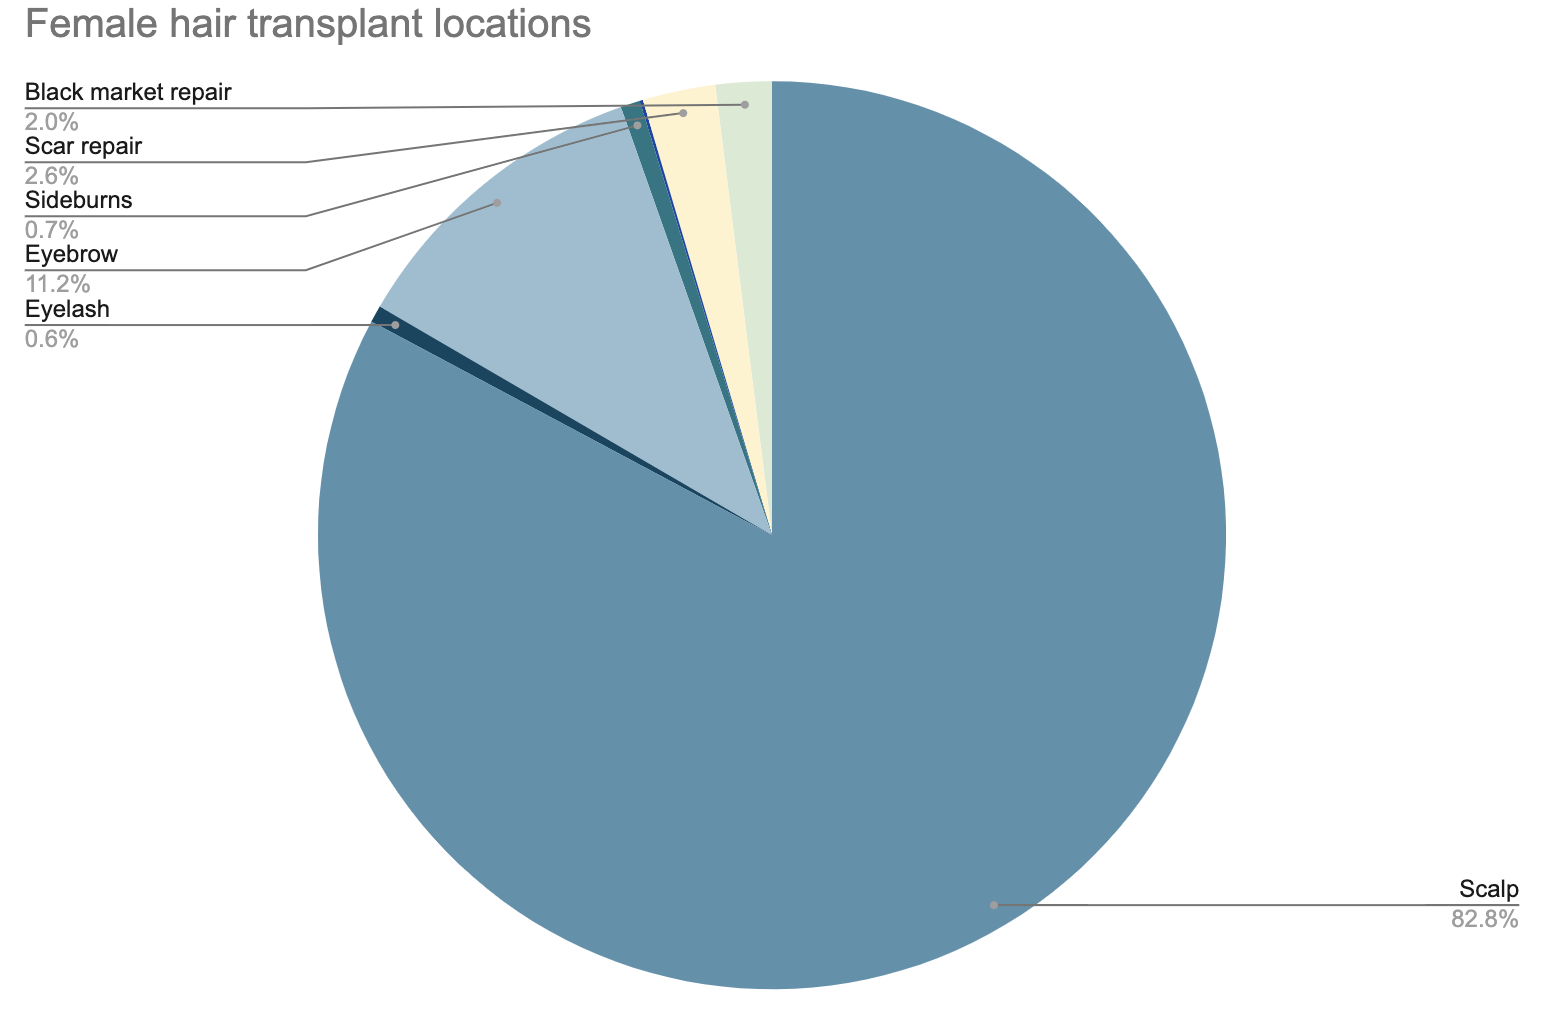 pie chart showing percentage of female hair transplant locations - 82.8% have scalp transplants, 11.2% have eyebrow transplants, 2.6% have scar repair, 2% have black market hair transplant repair.